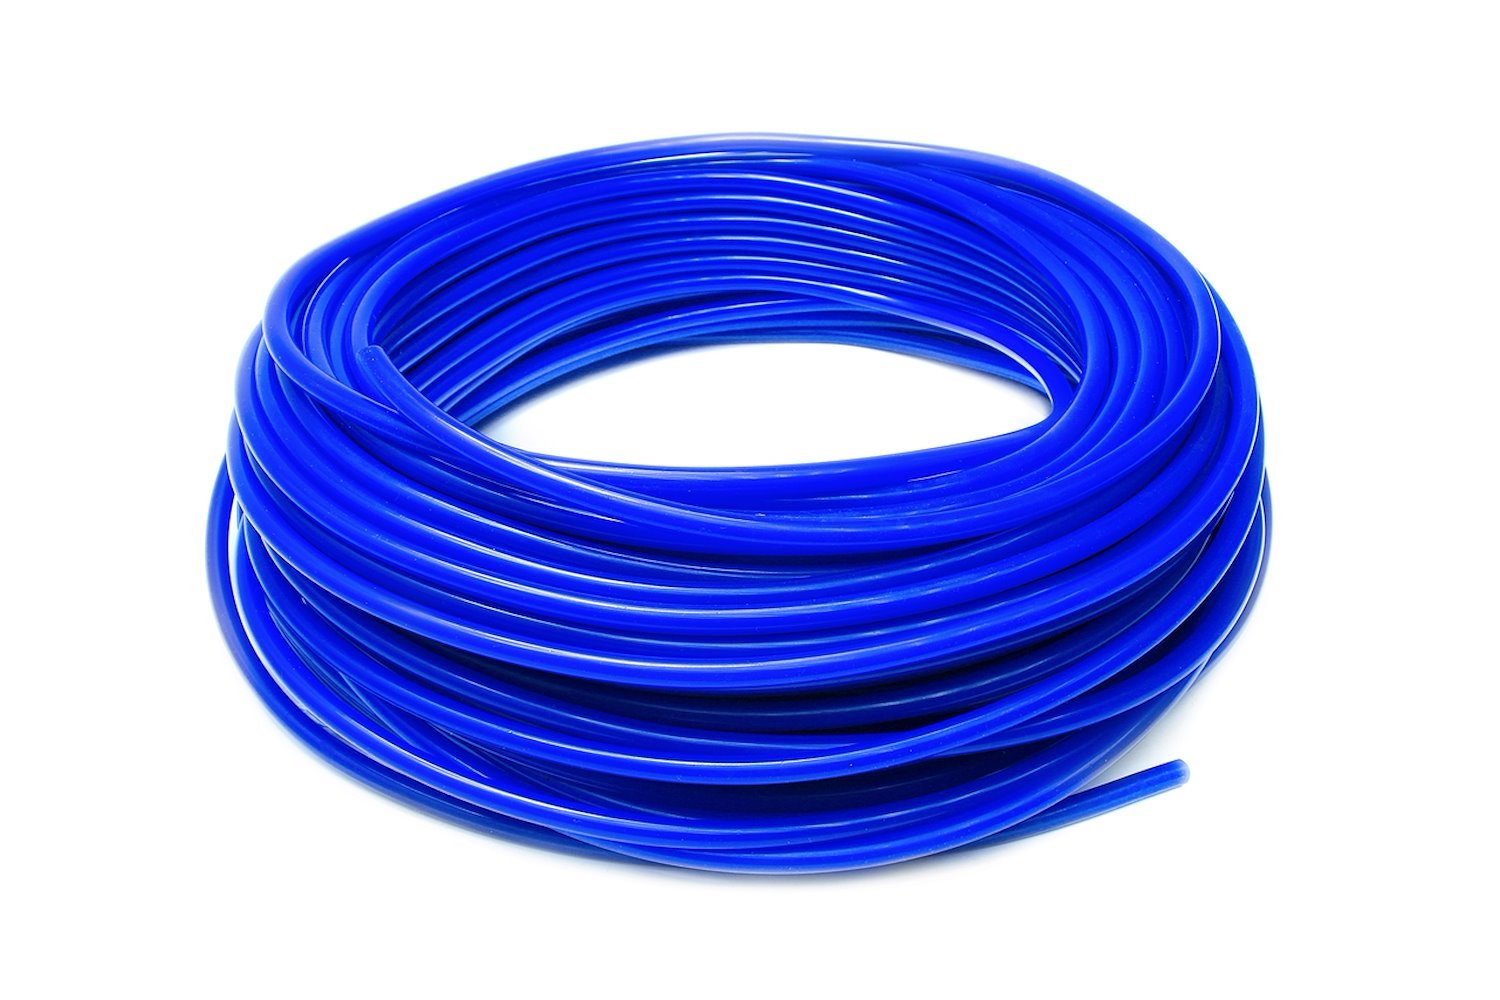 HTSVH10-BLUEx100 High-Temperature Silicone Vacuum Hose Tubing, 10 mm ID, 100 ft. Roll, Blue